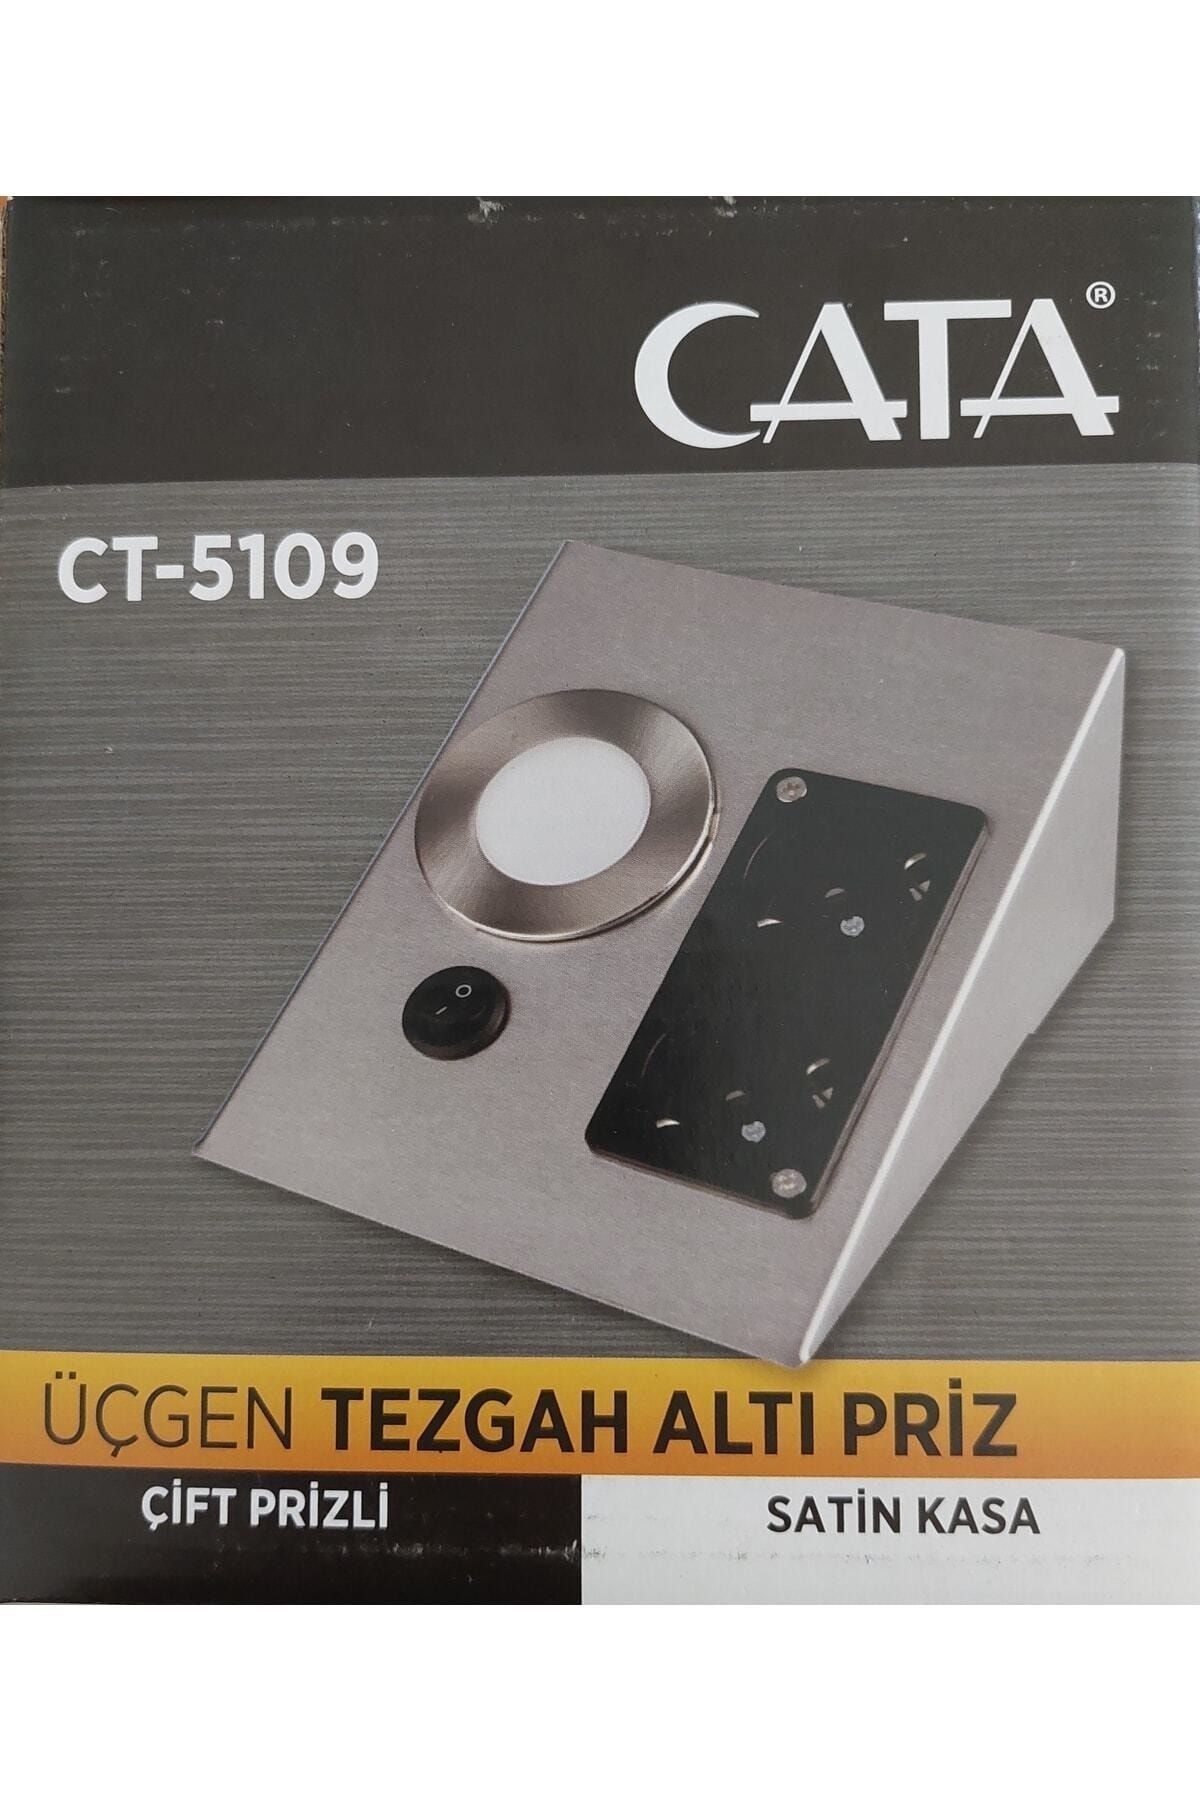 Cata Ct-5109 Tezgah Altı Çift Prizli Aydınlatma Beyaz